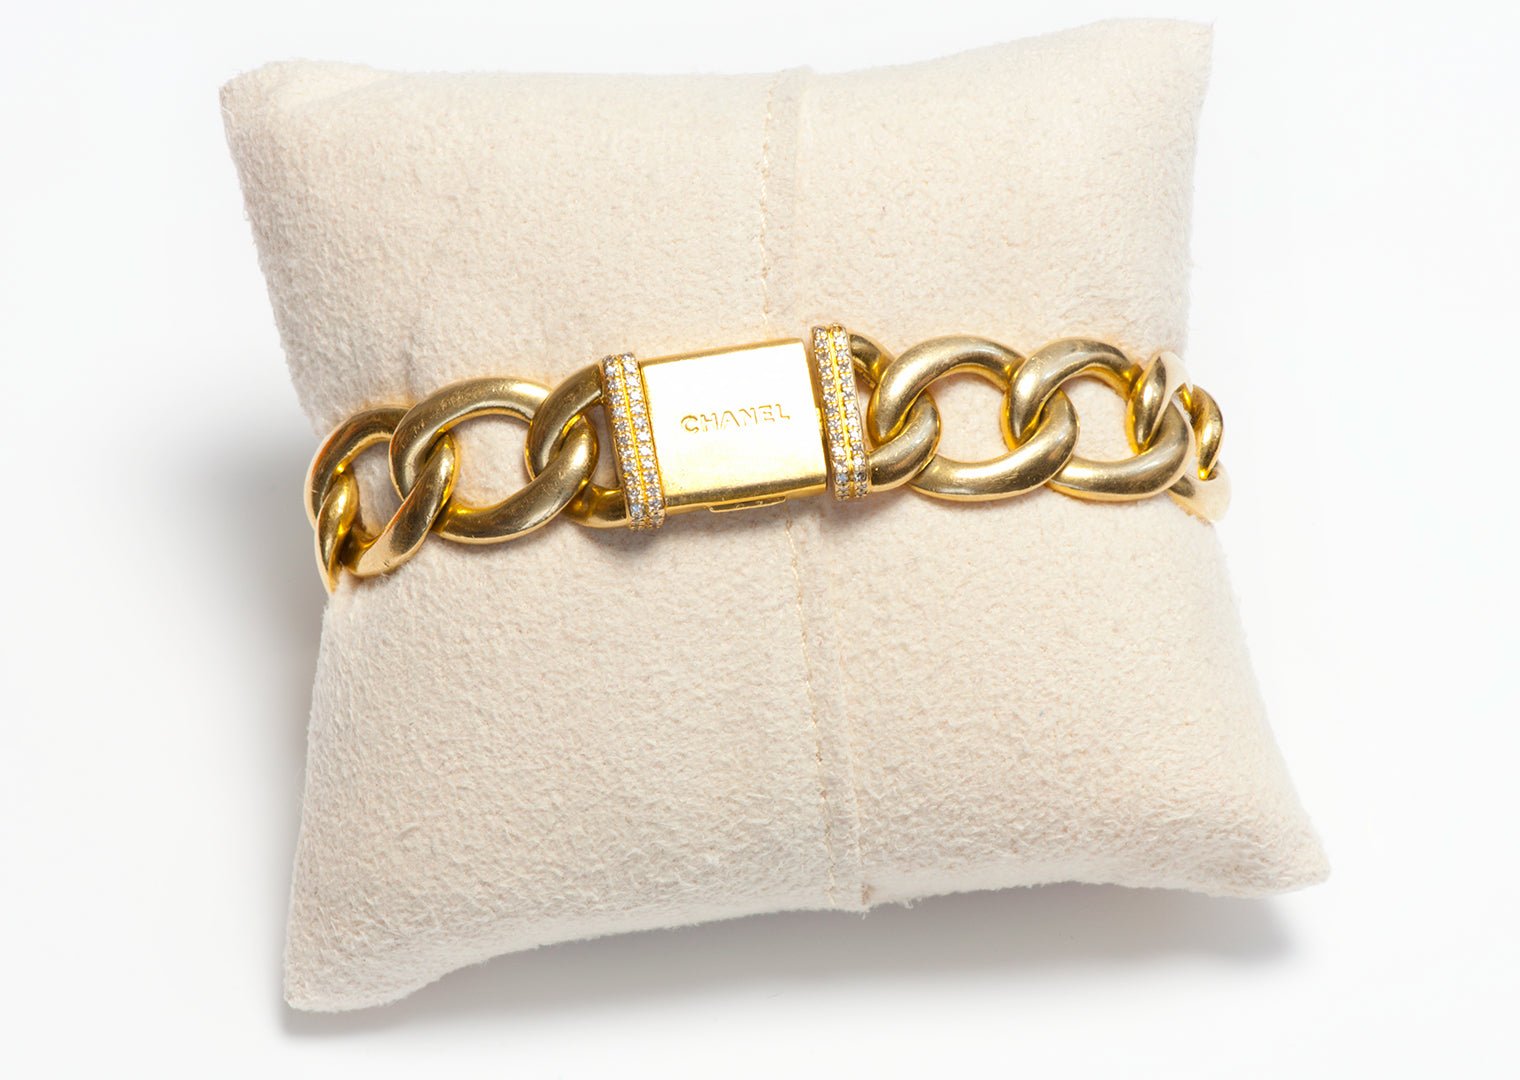 Chanel Premiere 18K Gold Diamond Ladies Chain Link Watch - DSF Antique Jewelry